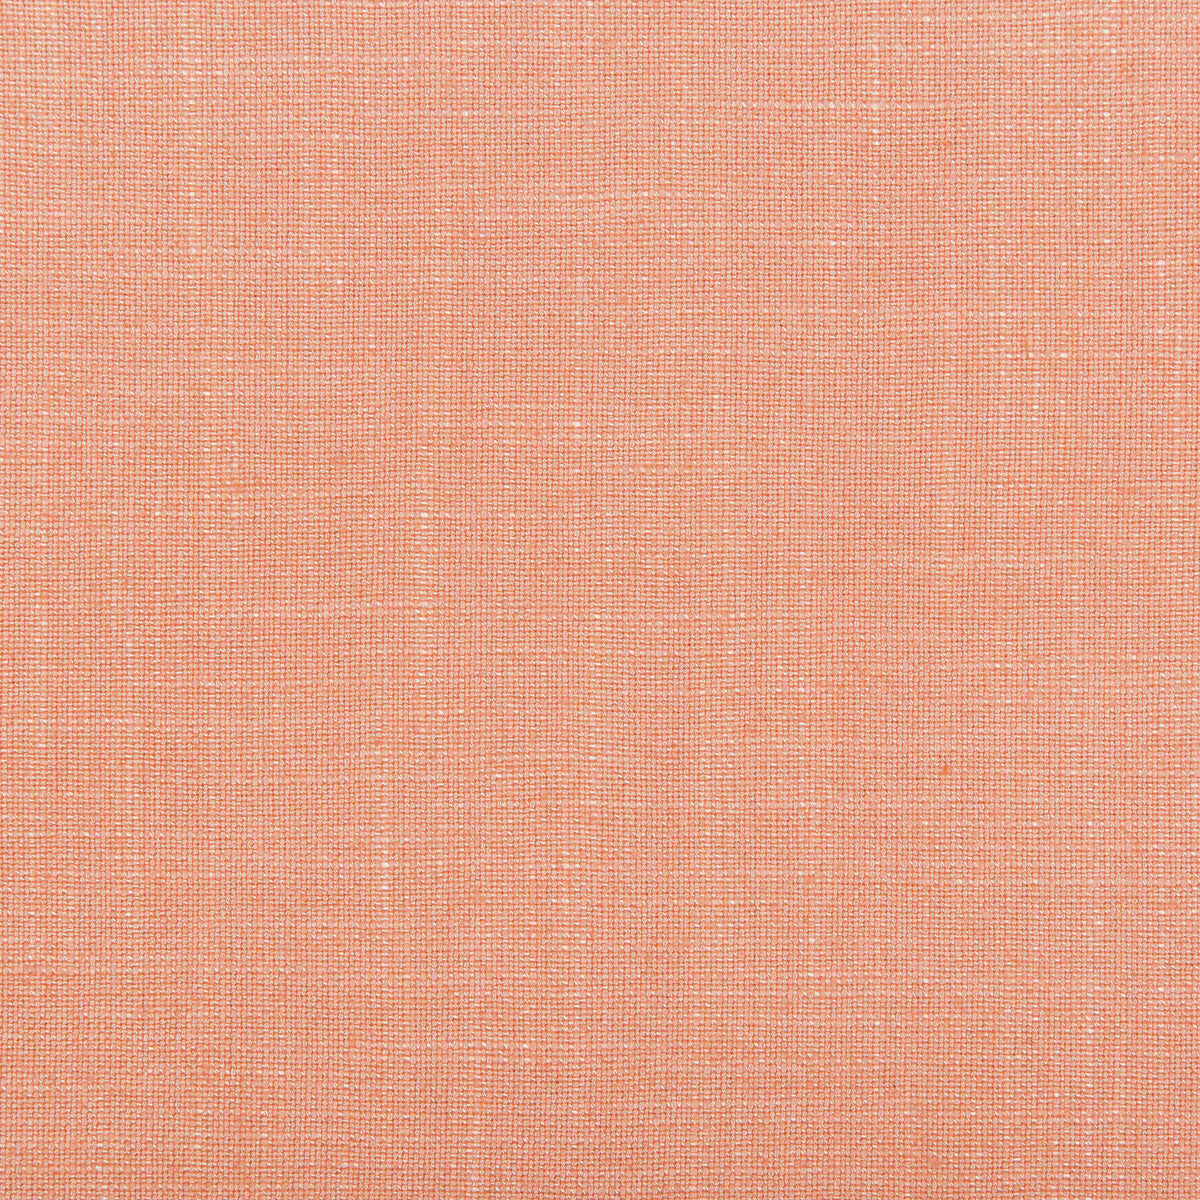 Aura fabric in petal color - pattern 35520.712.0 - by Kravet Design